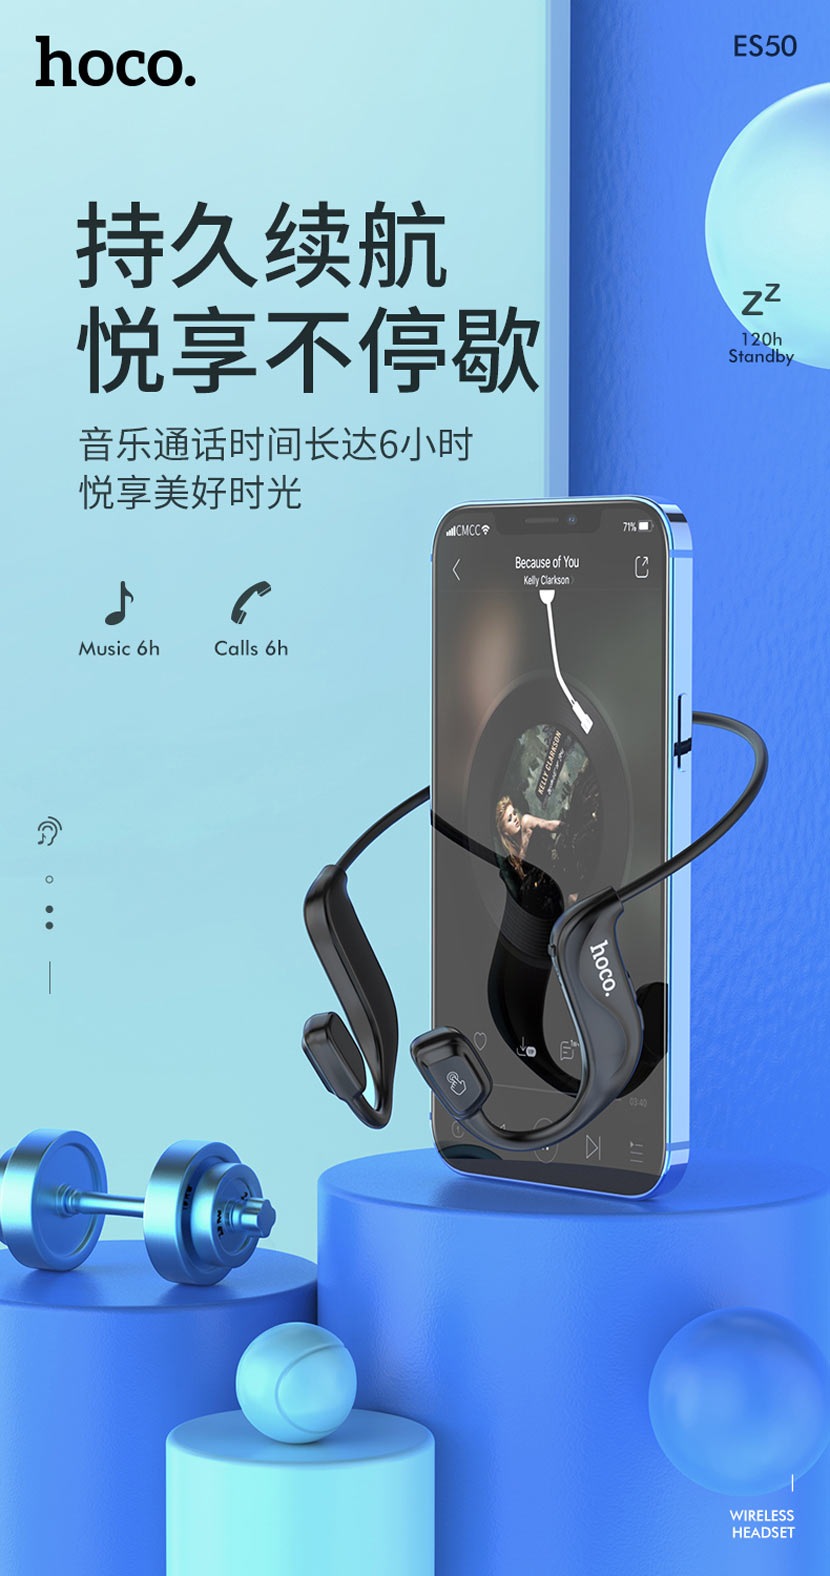 hoco news es50 rima air conduction bt headset battery cn